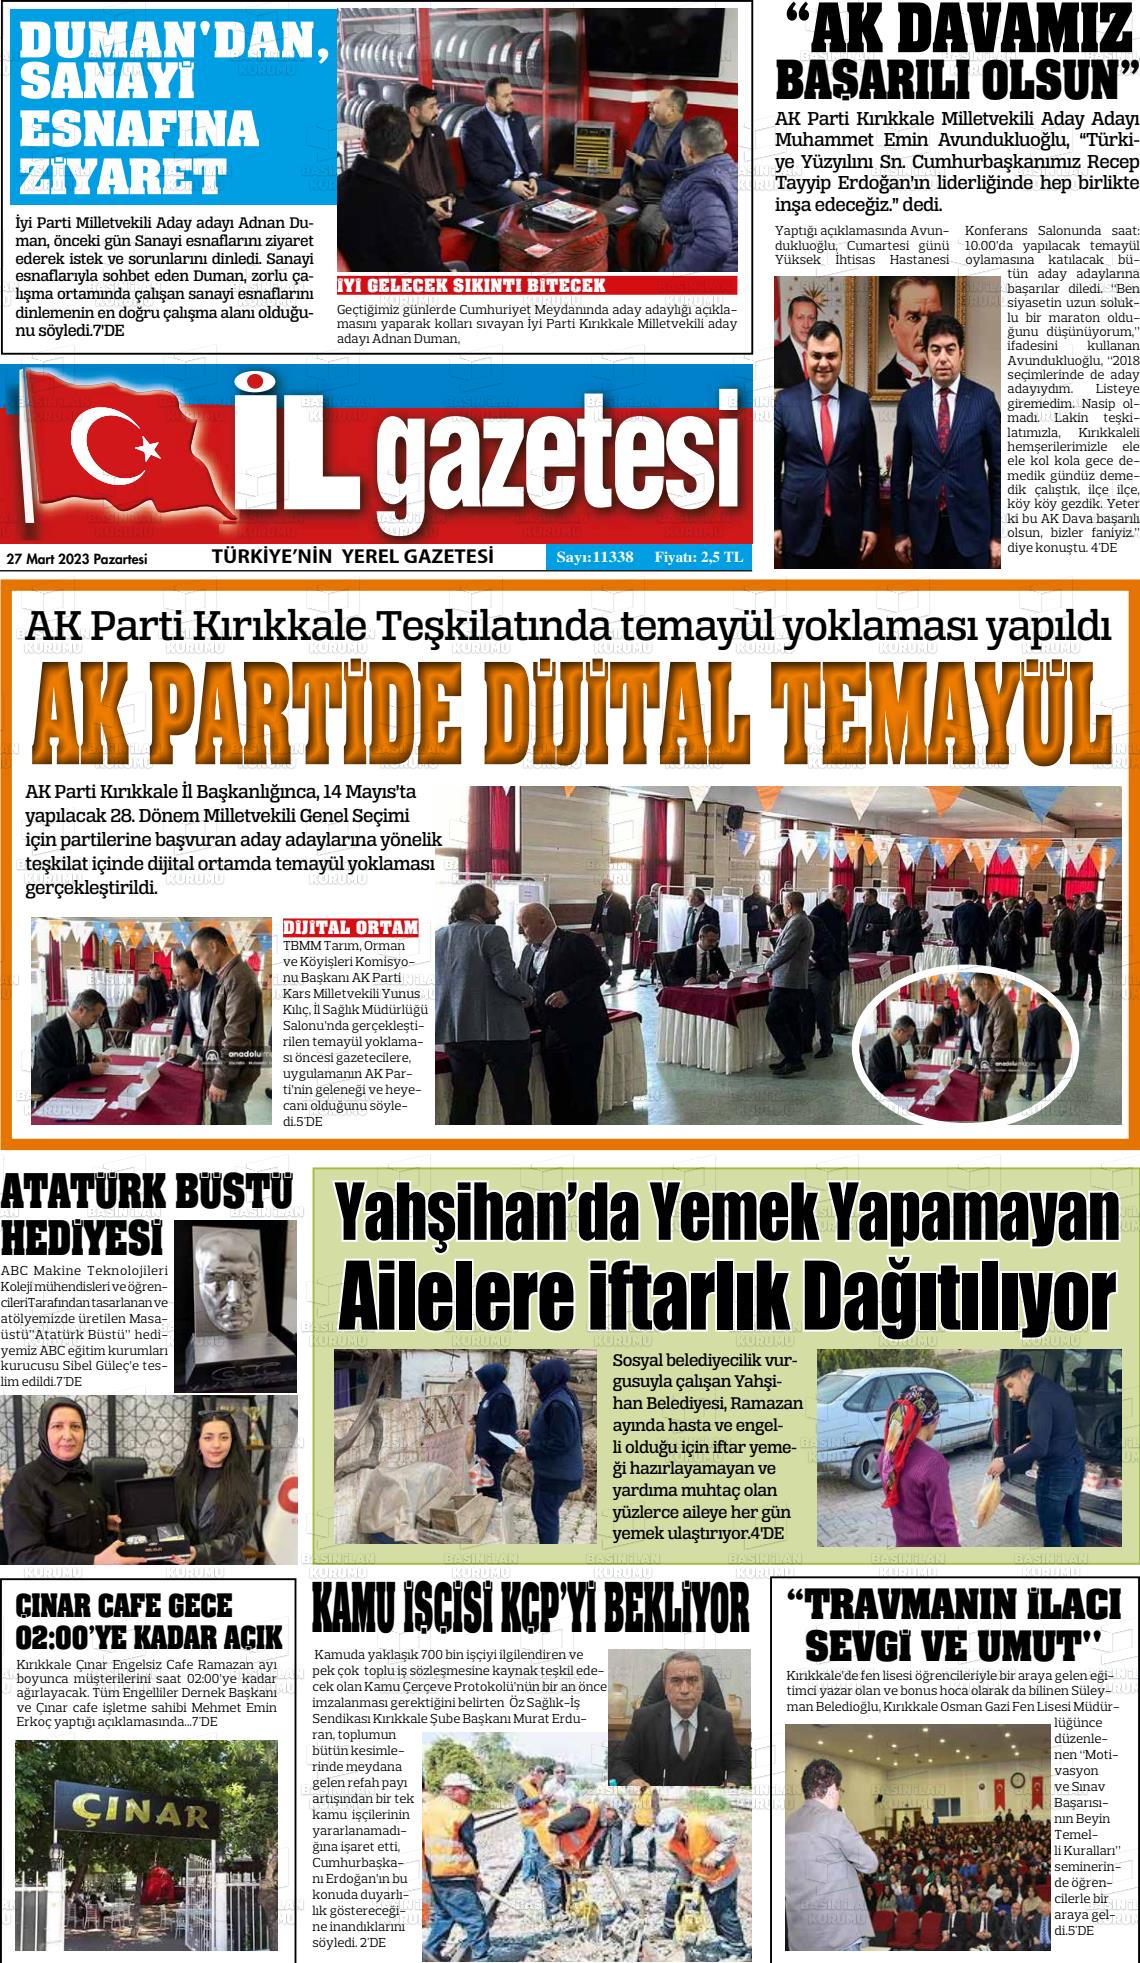 27 Mart 2023 Kırıkkale İl Gazete Manşeti